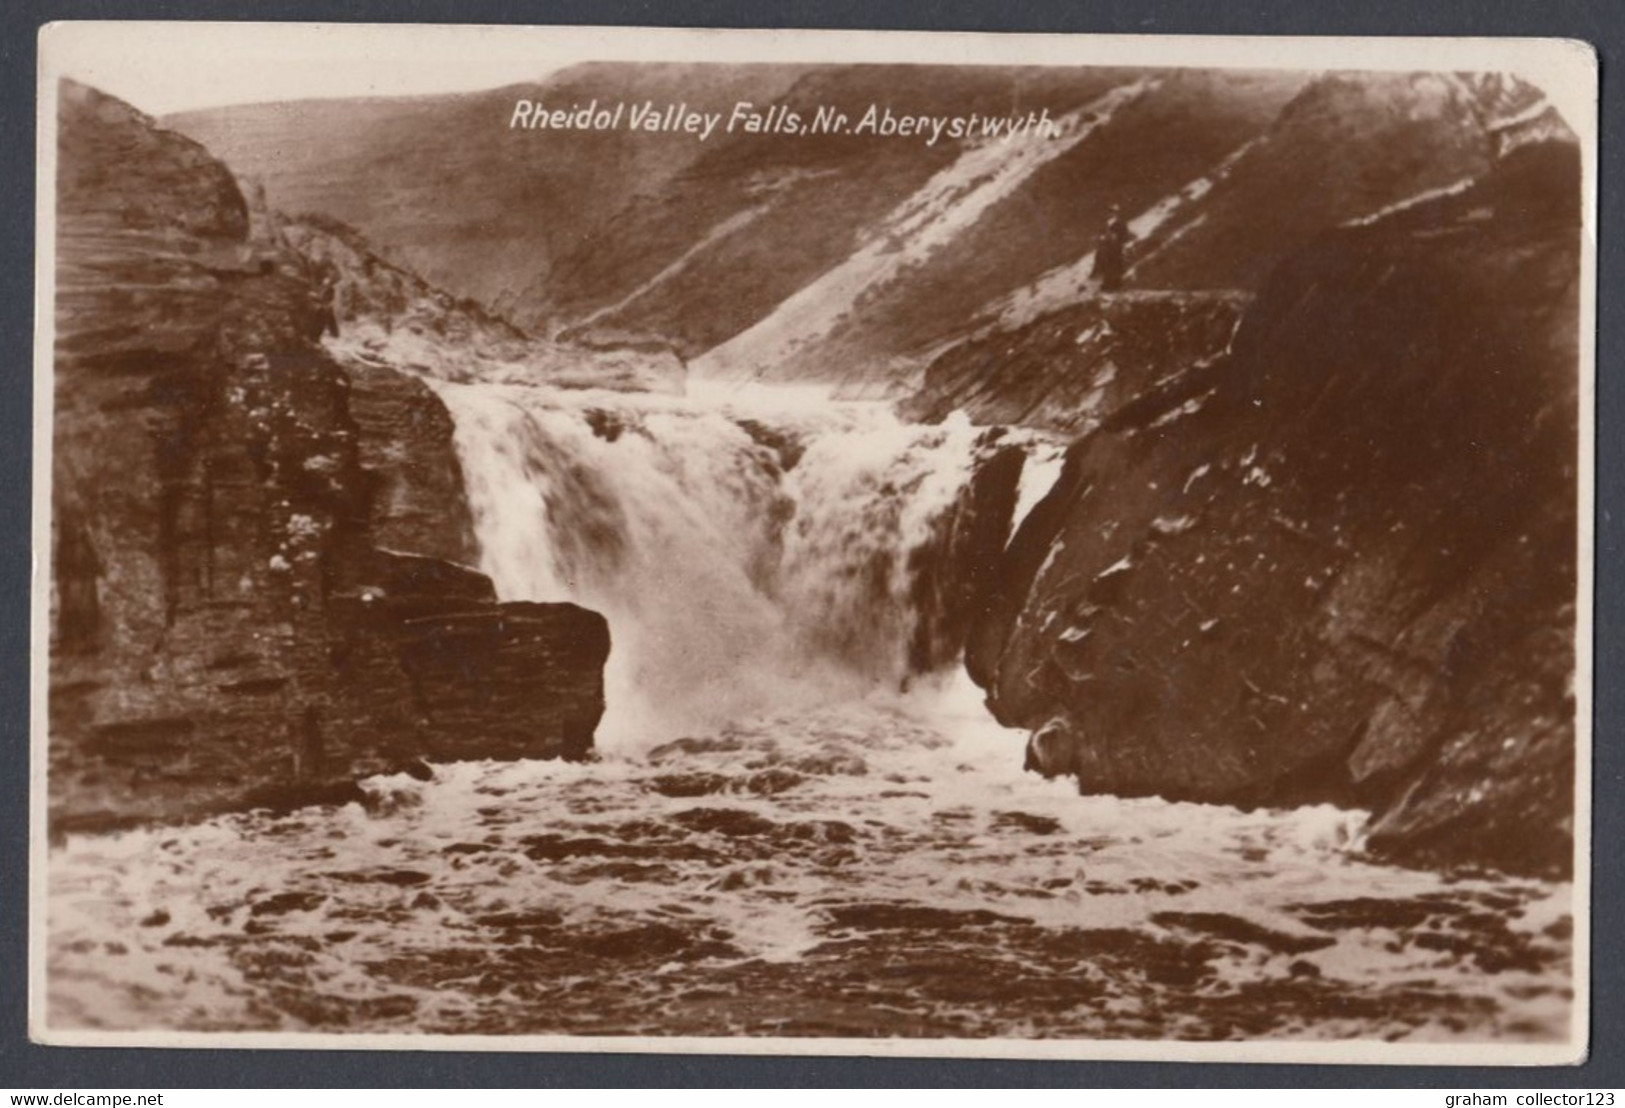 Vintage Photo Postcard Postale Carte Postkarte Rheidol Valley Falls Nr Aberystwyth Posted 1929 GB Union Congress Stamp - Cardiganshire